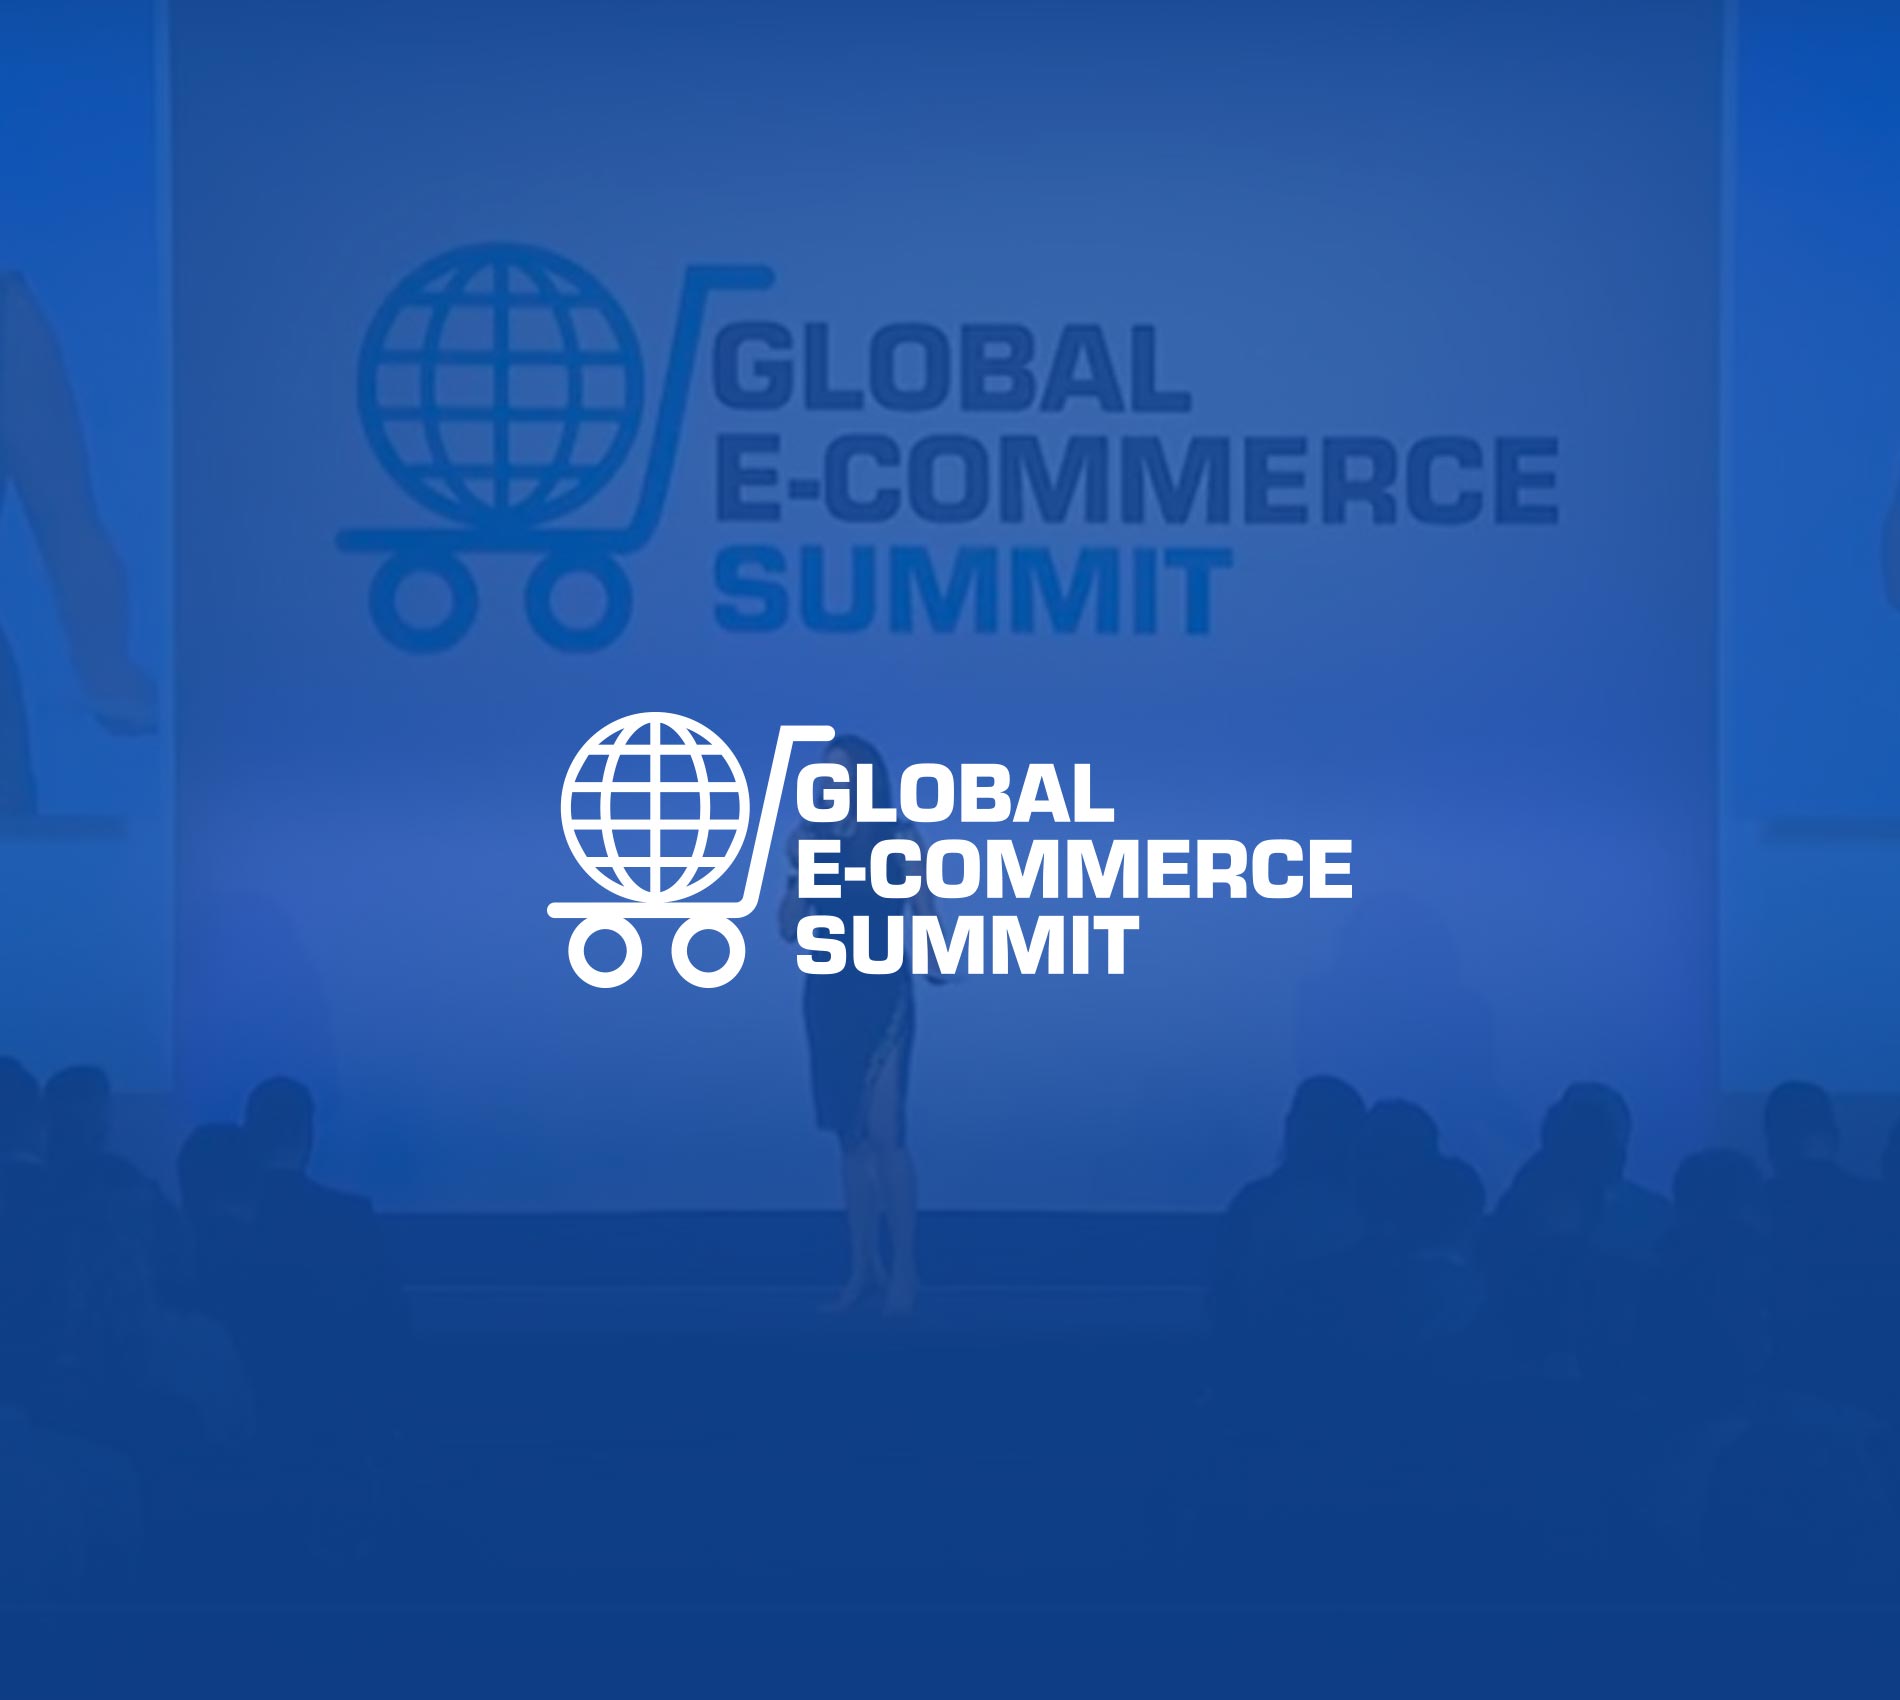 Global E-commerce Summit 2013, Barcelona